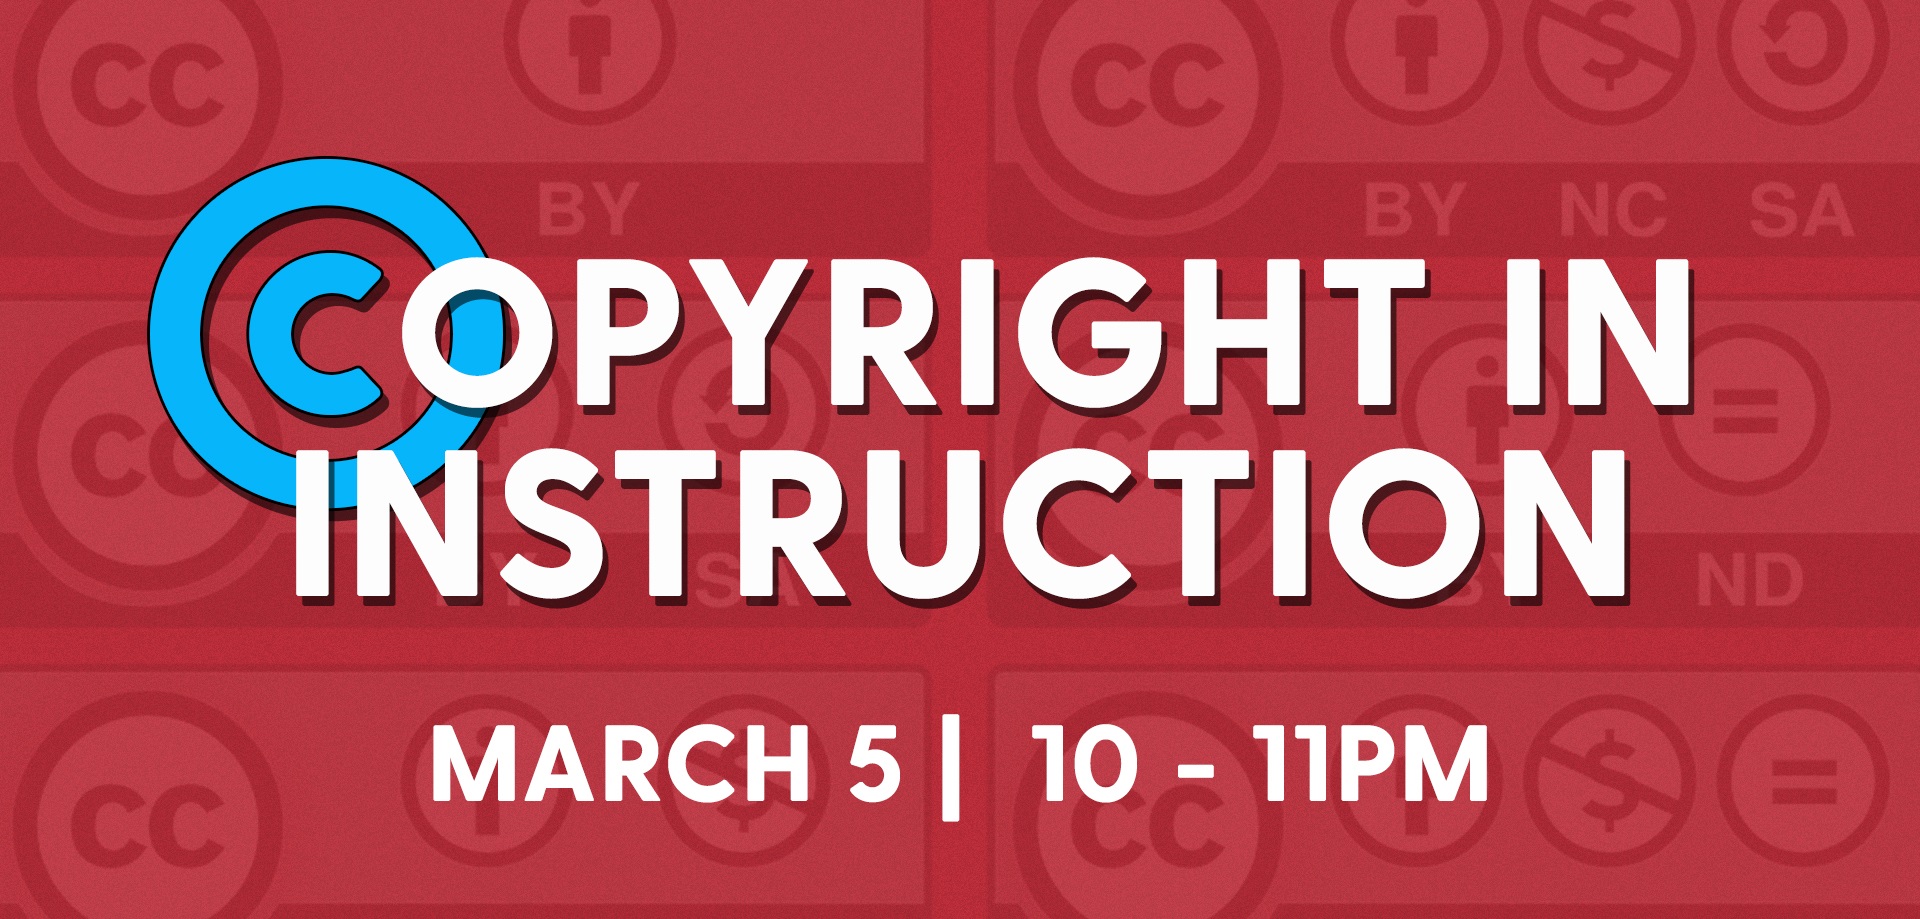 Copyright in Instruction workshop promotional image